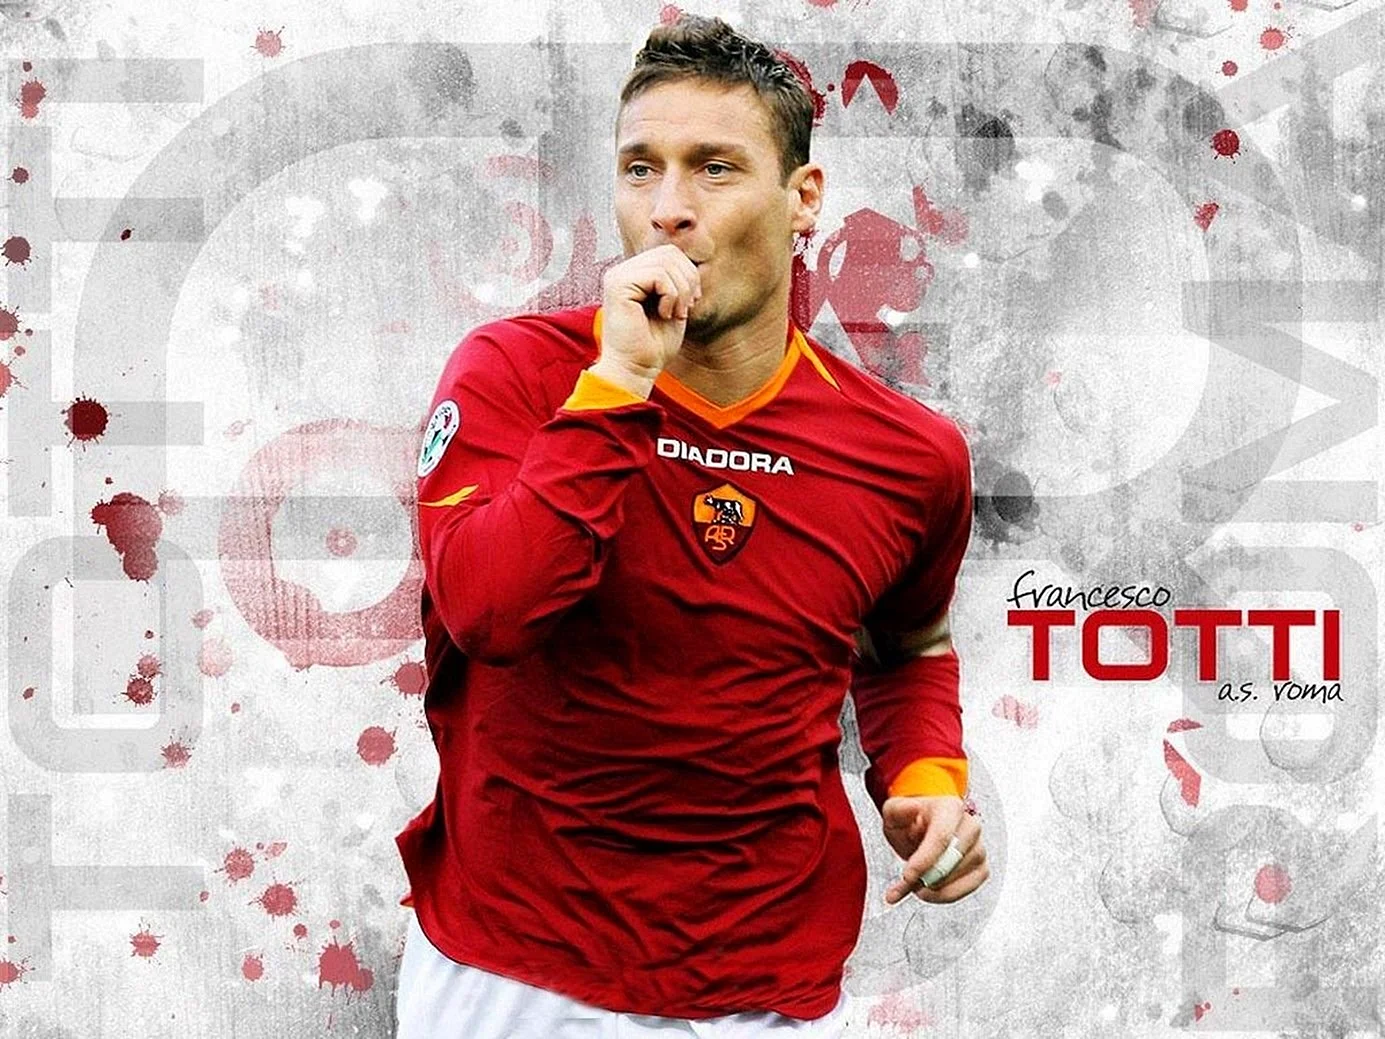 Francesco Totti Wallpaper